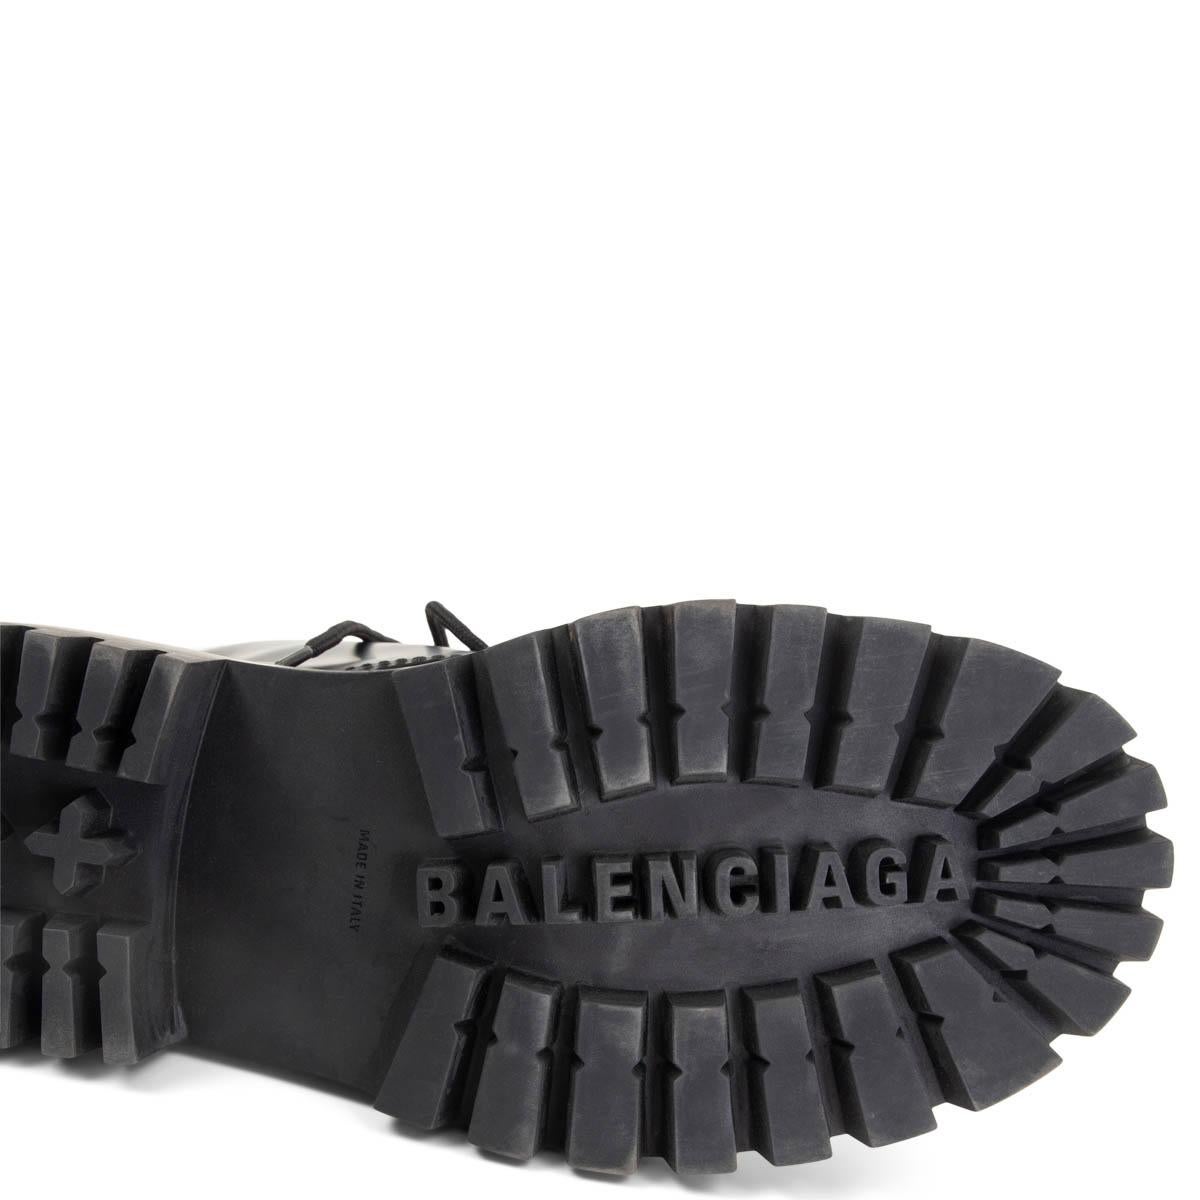 Black BALENCIAGA black leather STRIKE Combat Boots Shoes 38.5